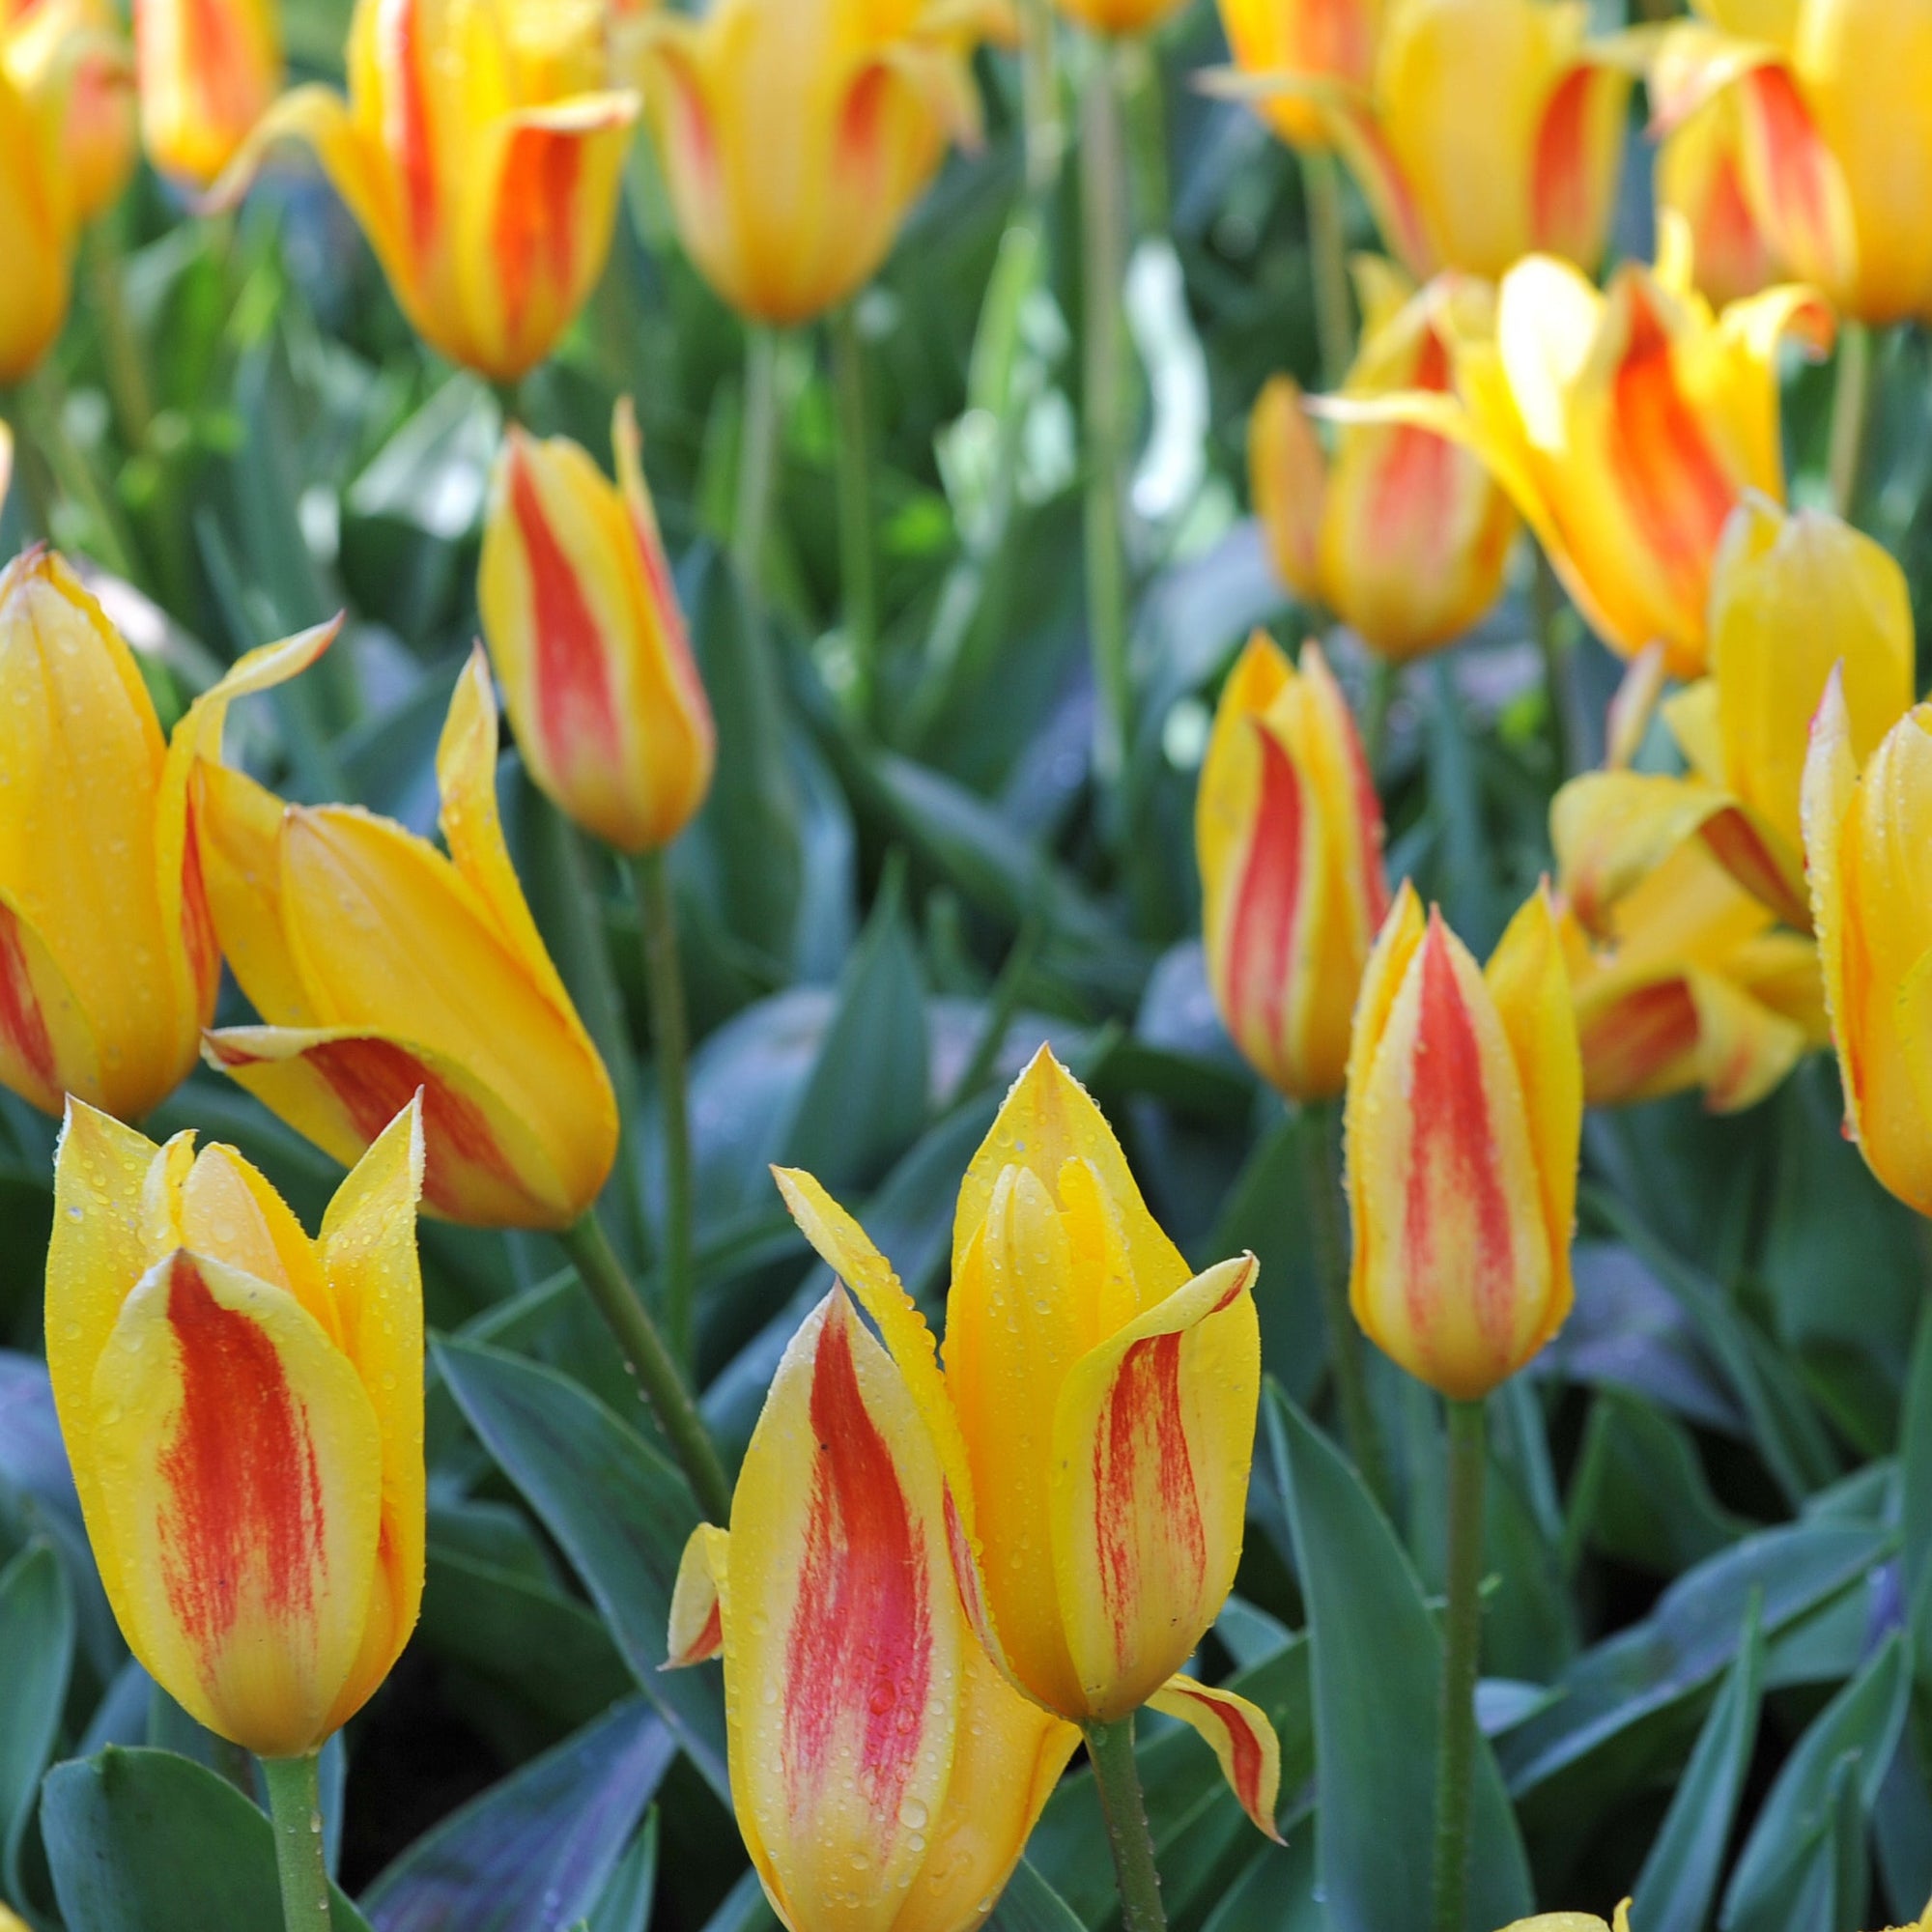 Tulip 'Giuseppe Verdi' (8 Bulbs)